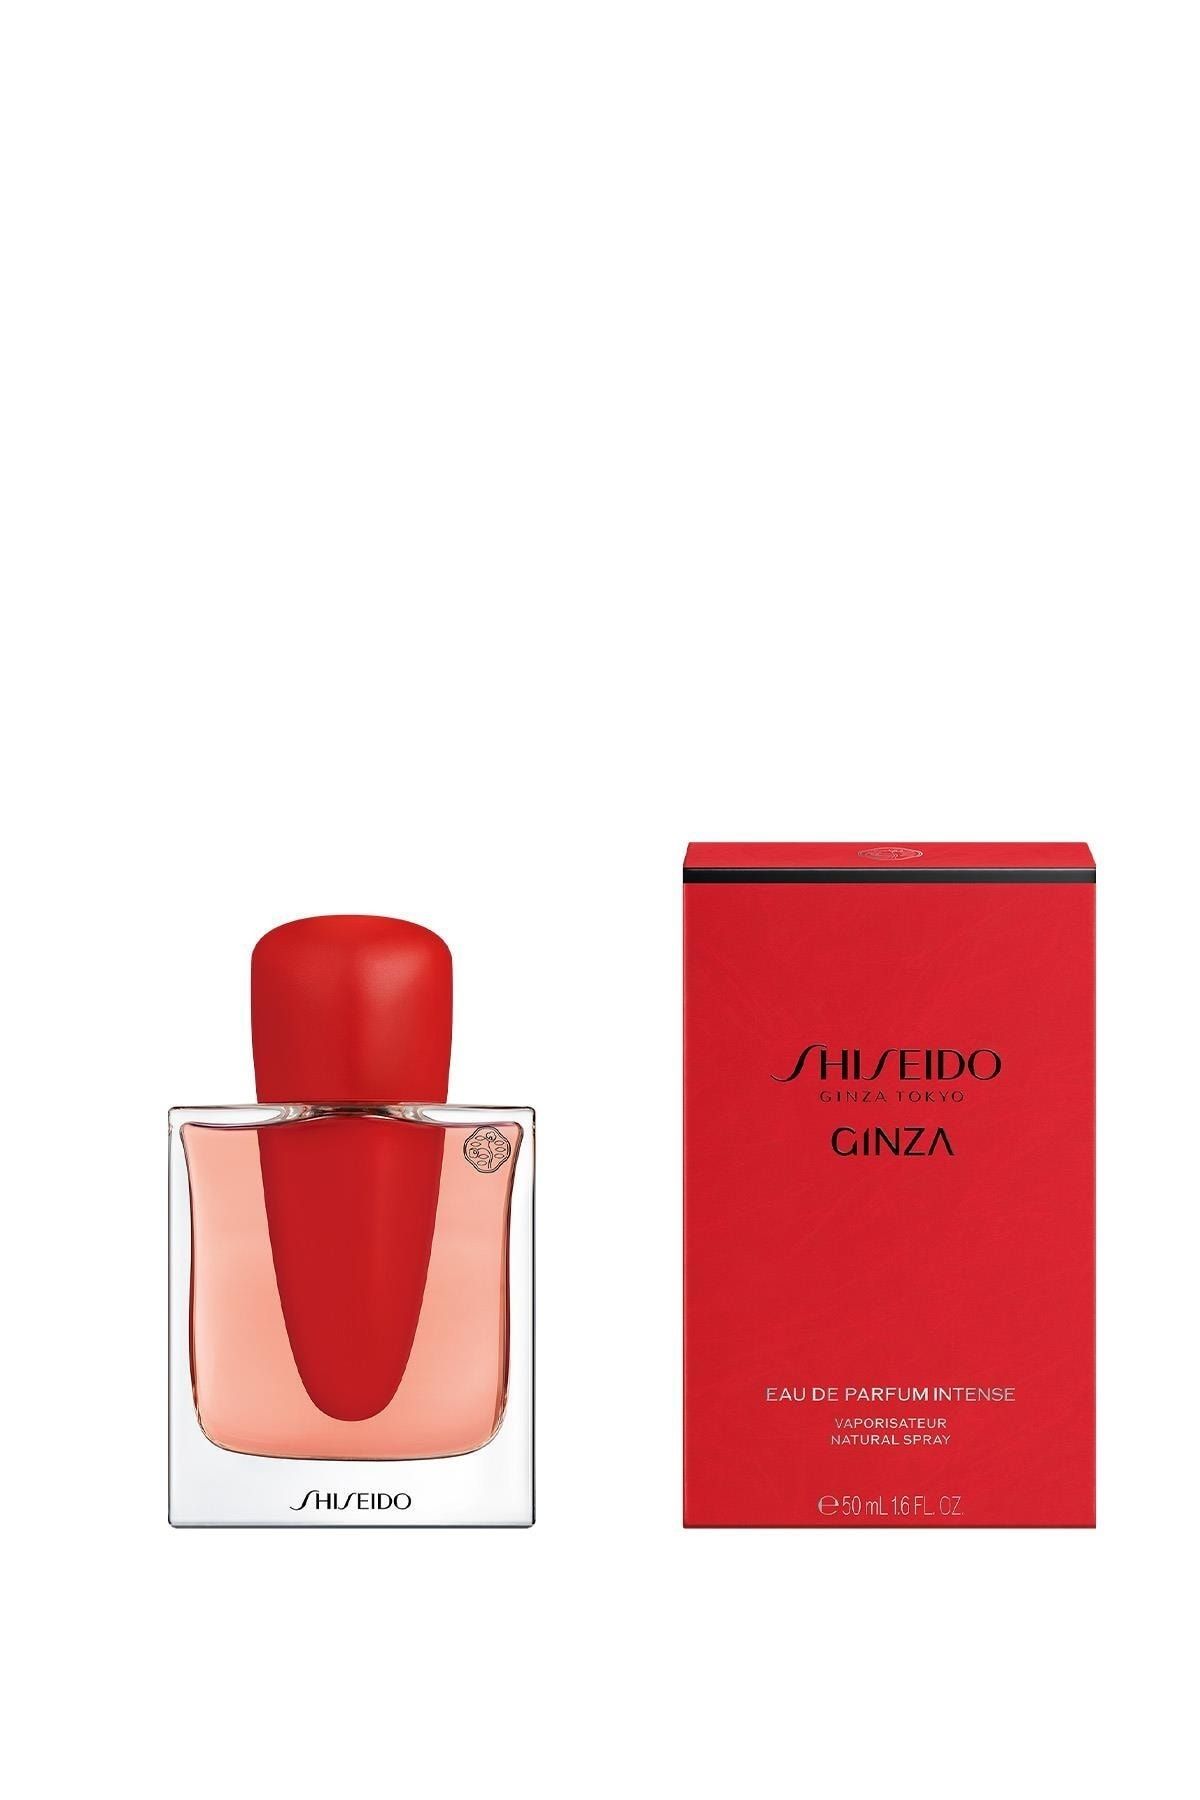 Shiseido Gınza Eau De Parfum Intense